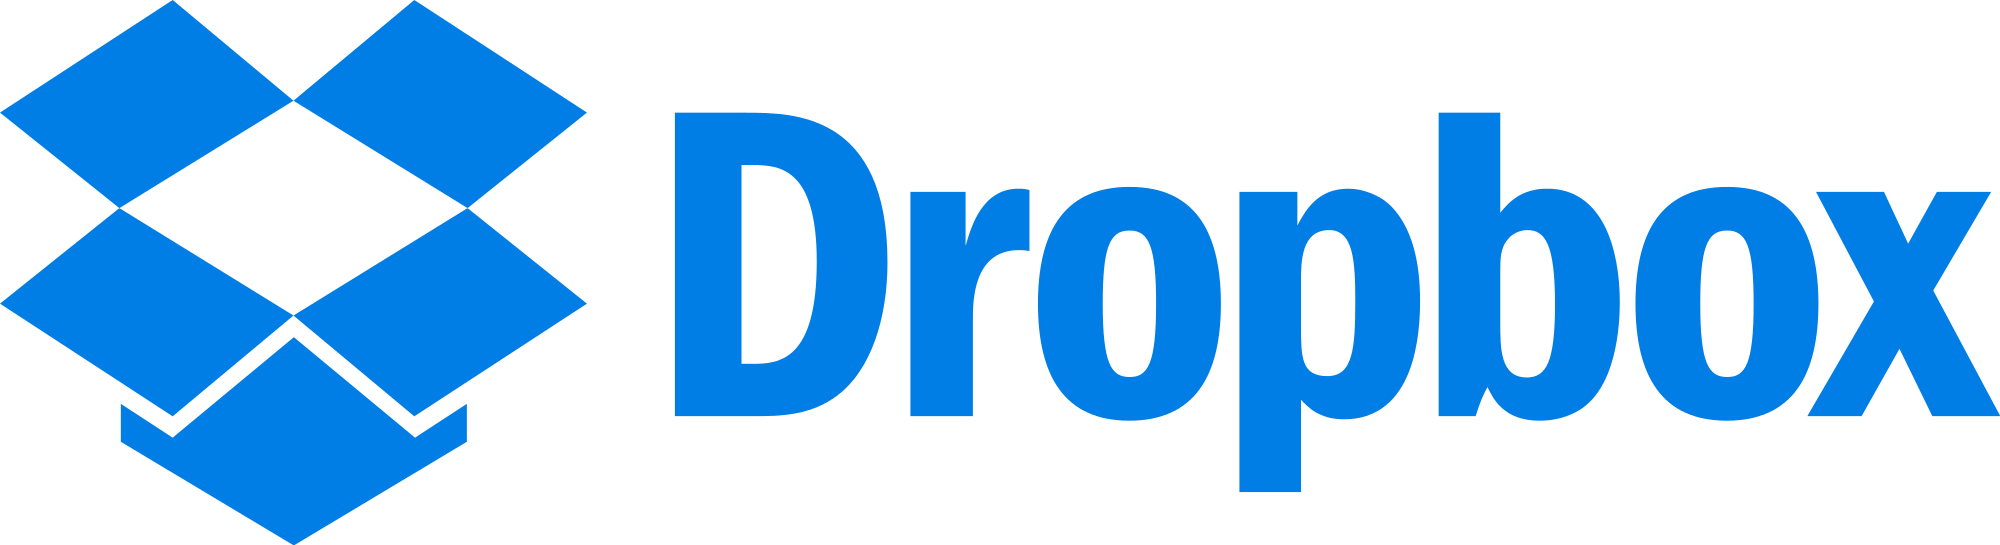 Dropbox Logo - File:Dropbox logo (2013).svg - Wikimedia Commons